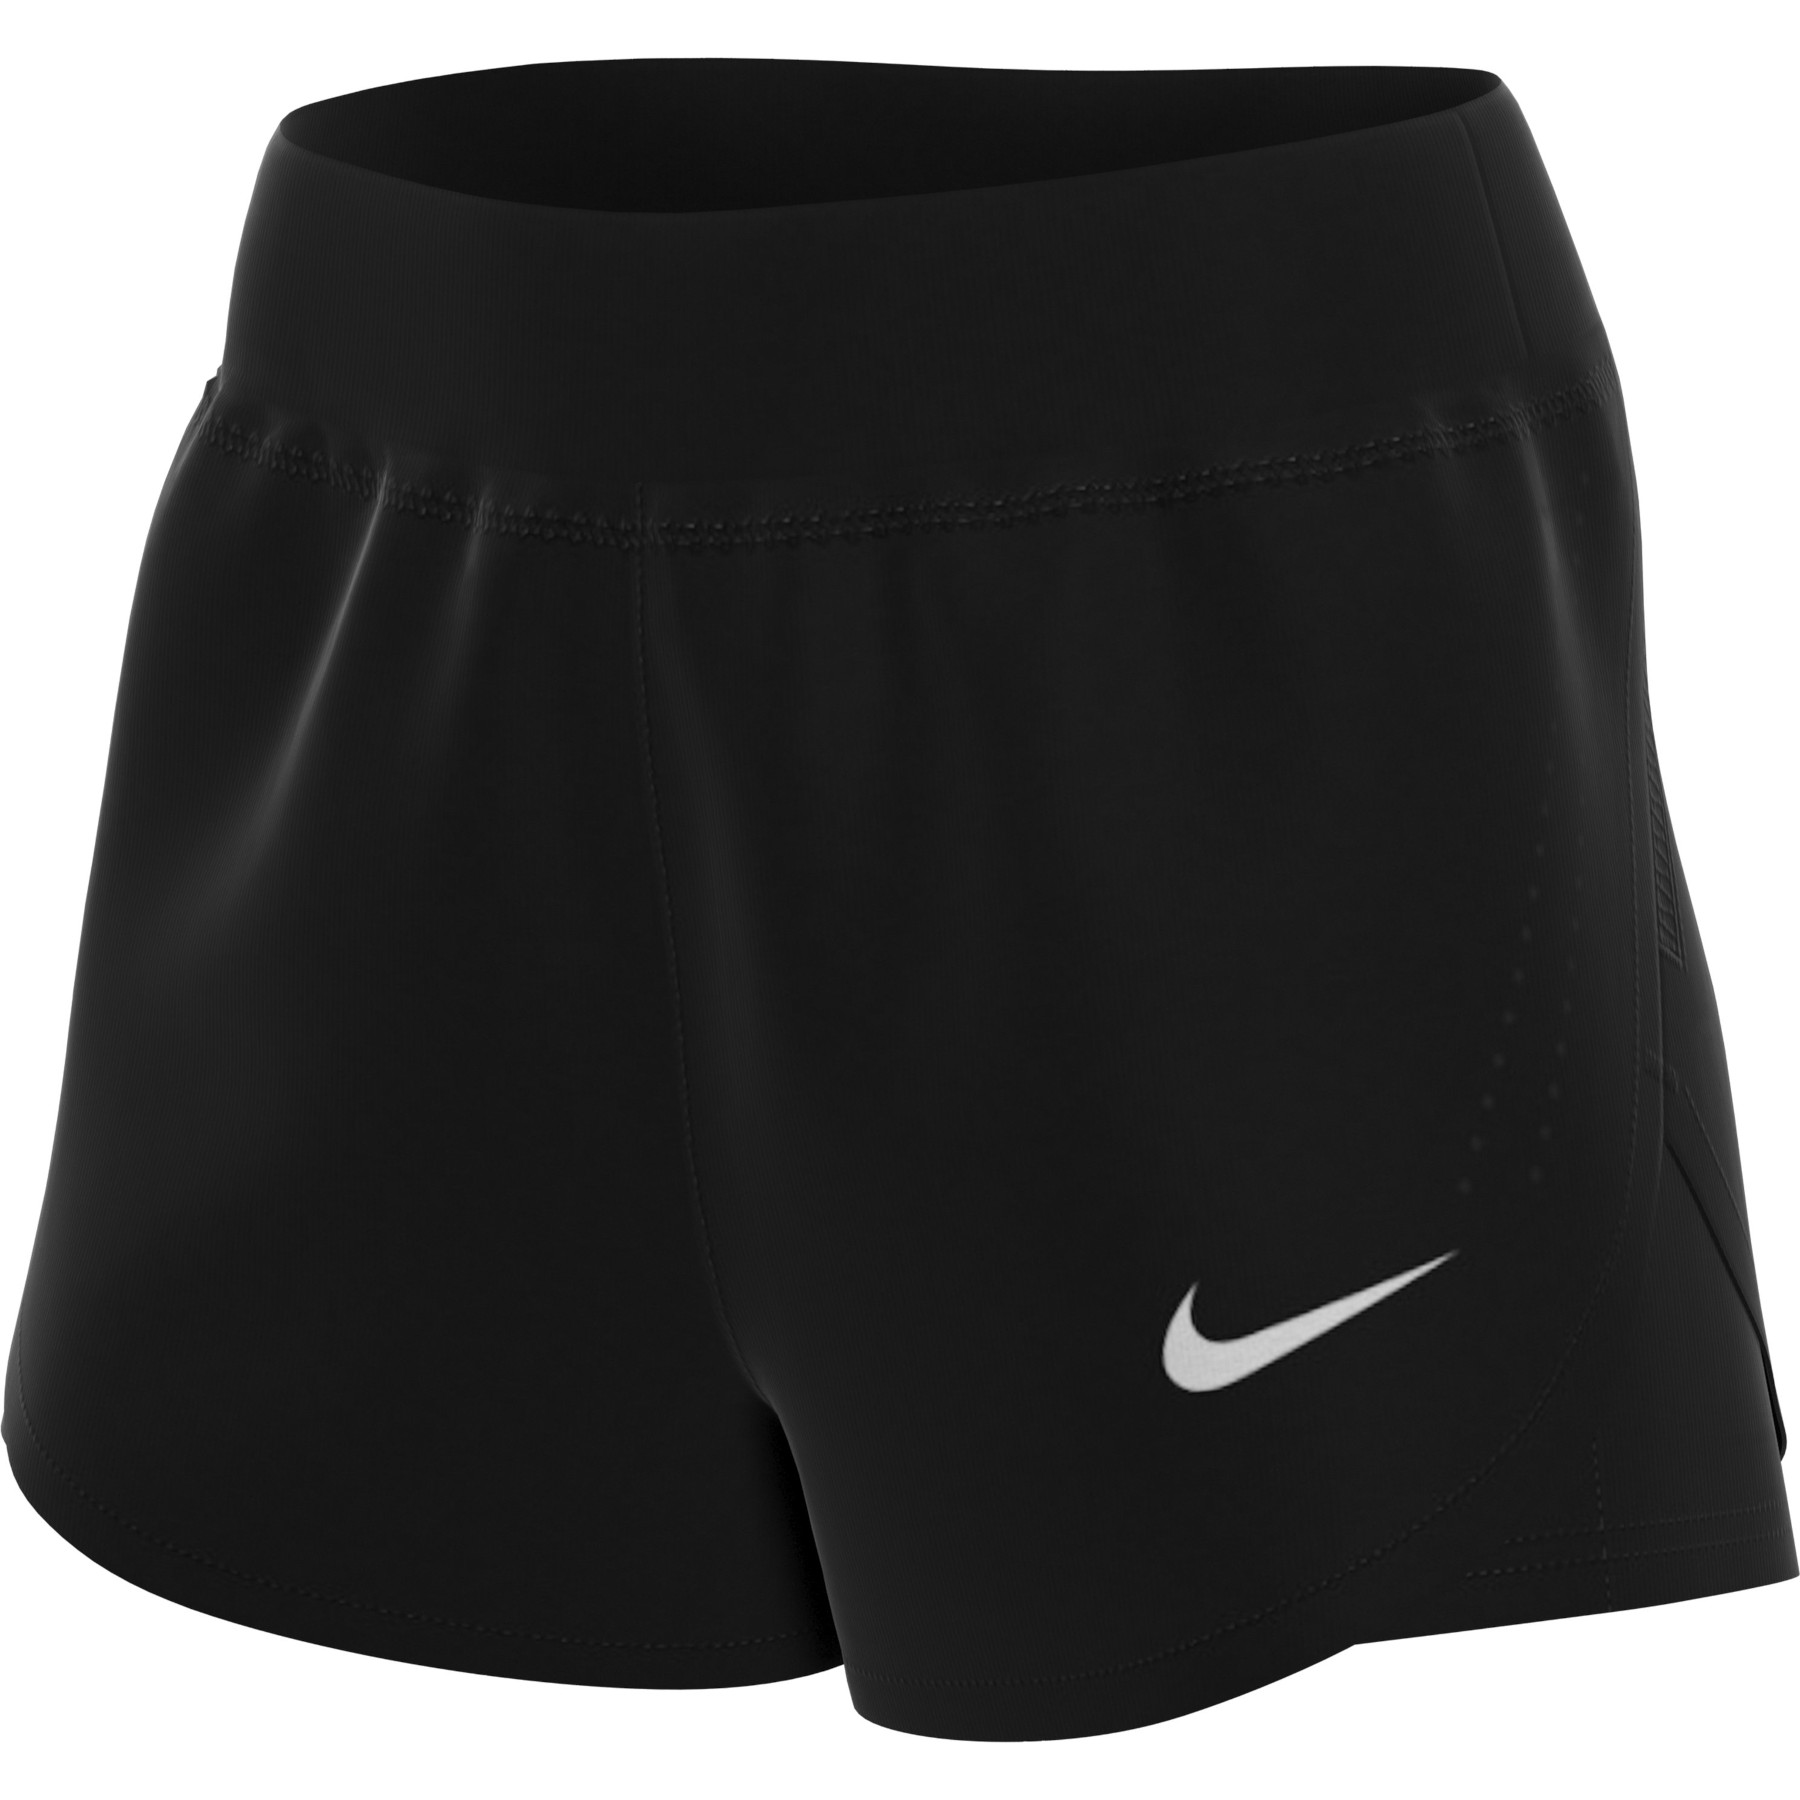 Productfoto van Nike Eclipse 2-In-1 Hardloopshorts Dames - black/reflective silver CZ9570-010